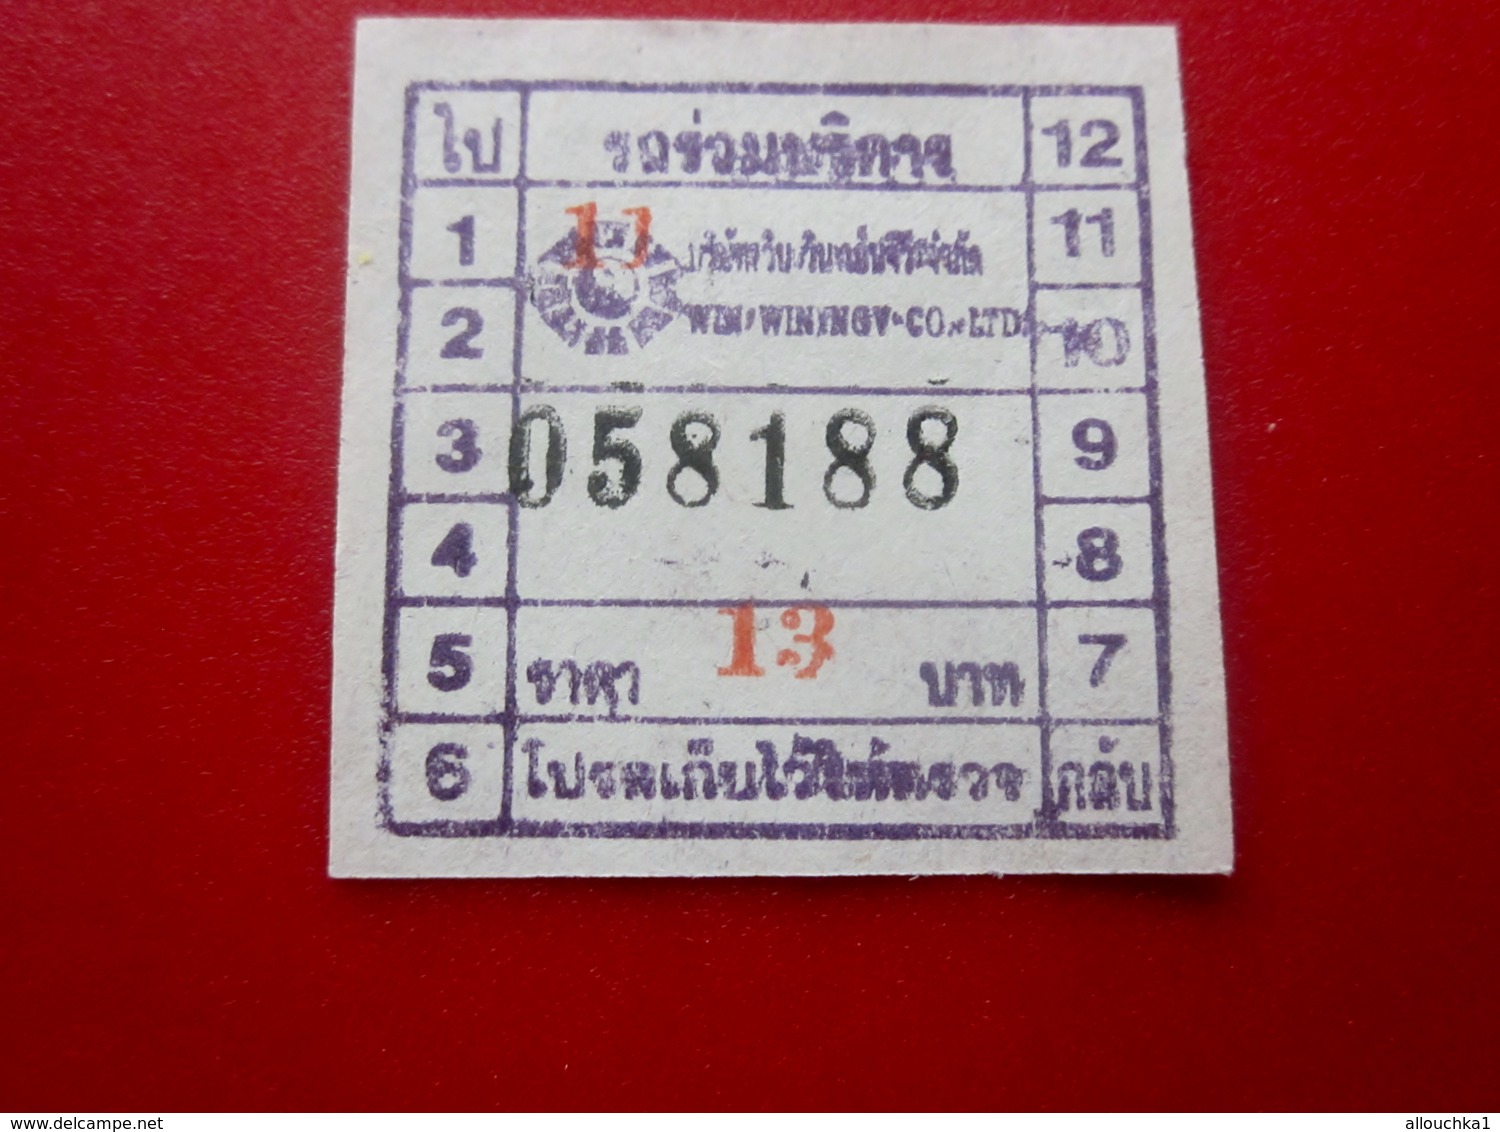 THAILAND THAILANDE -Boleto De Tren -Titre De Transport Billet Ticket-Tramway,Bus,Autobus,Railway,Métro - Wereld